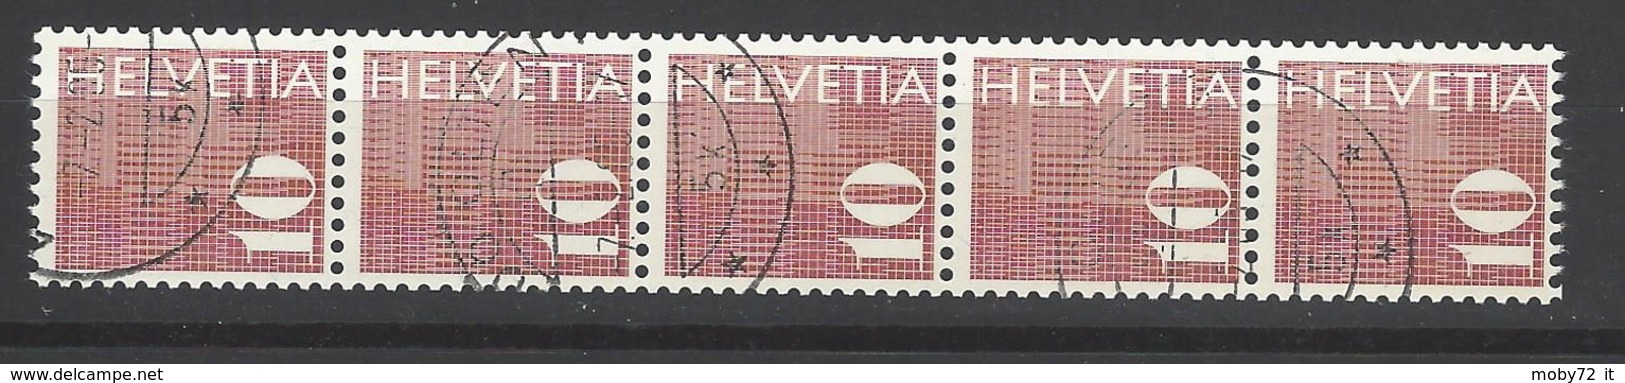 Svizzera - 1970 - Usato/used - Rollenmarken - Mi N. 933 - Rollen